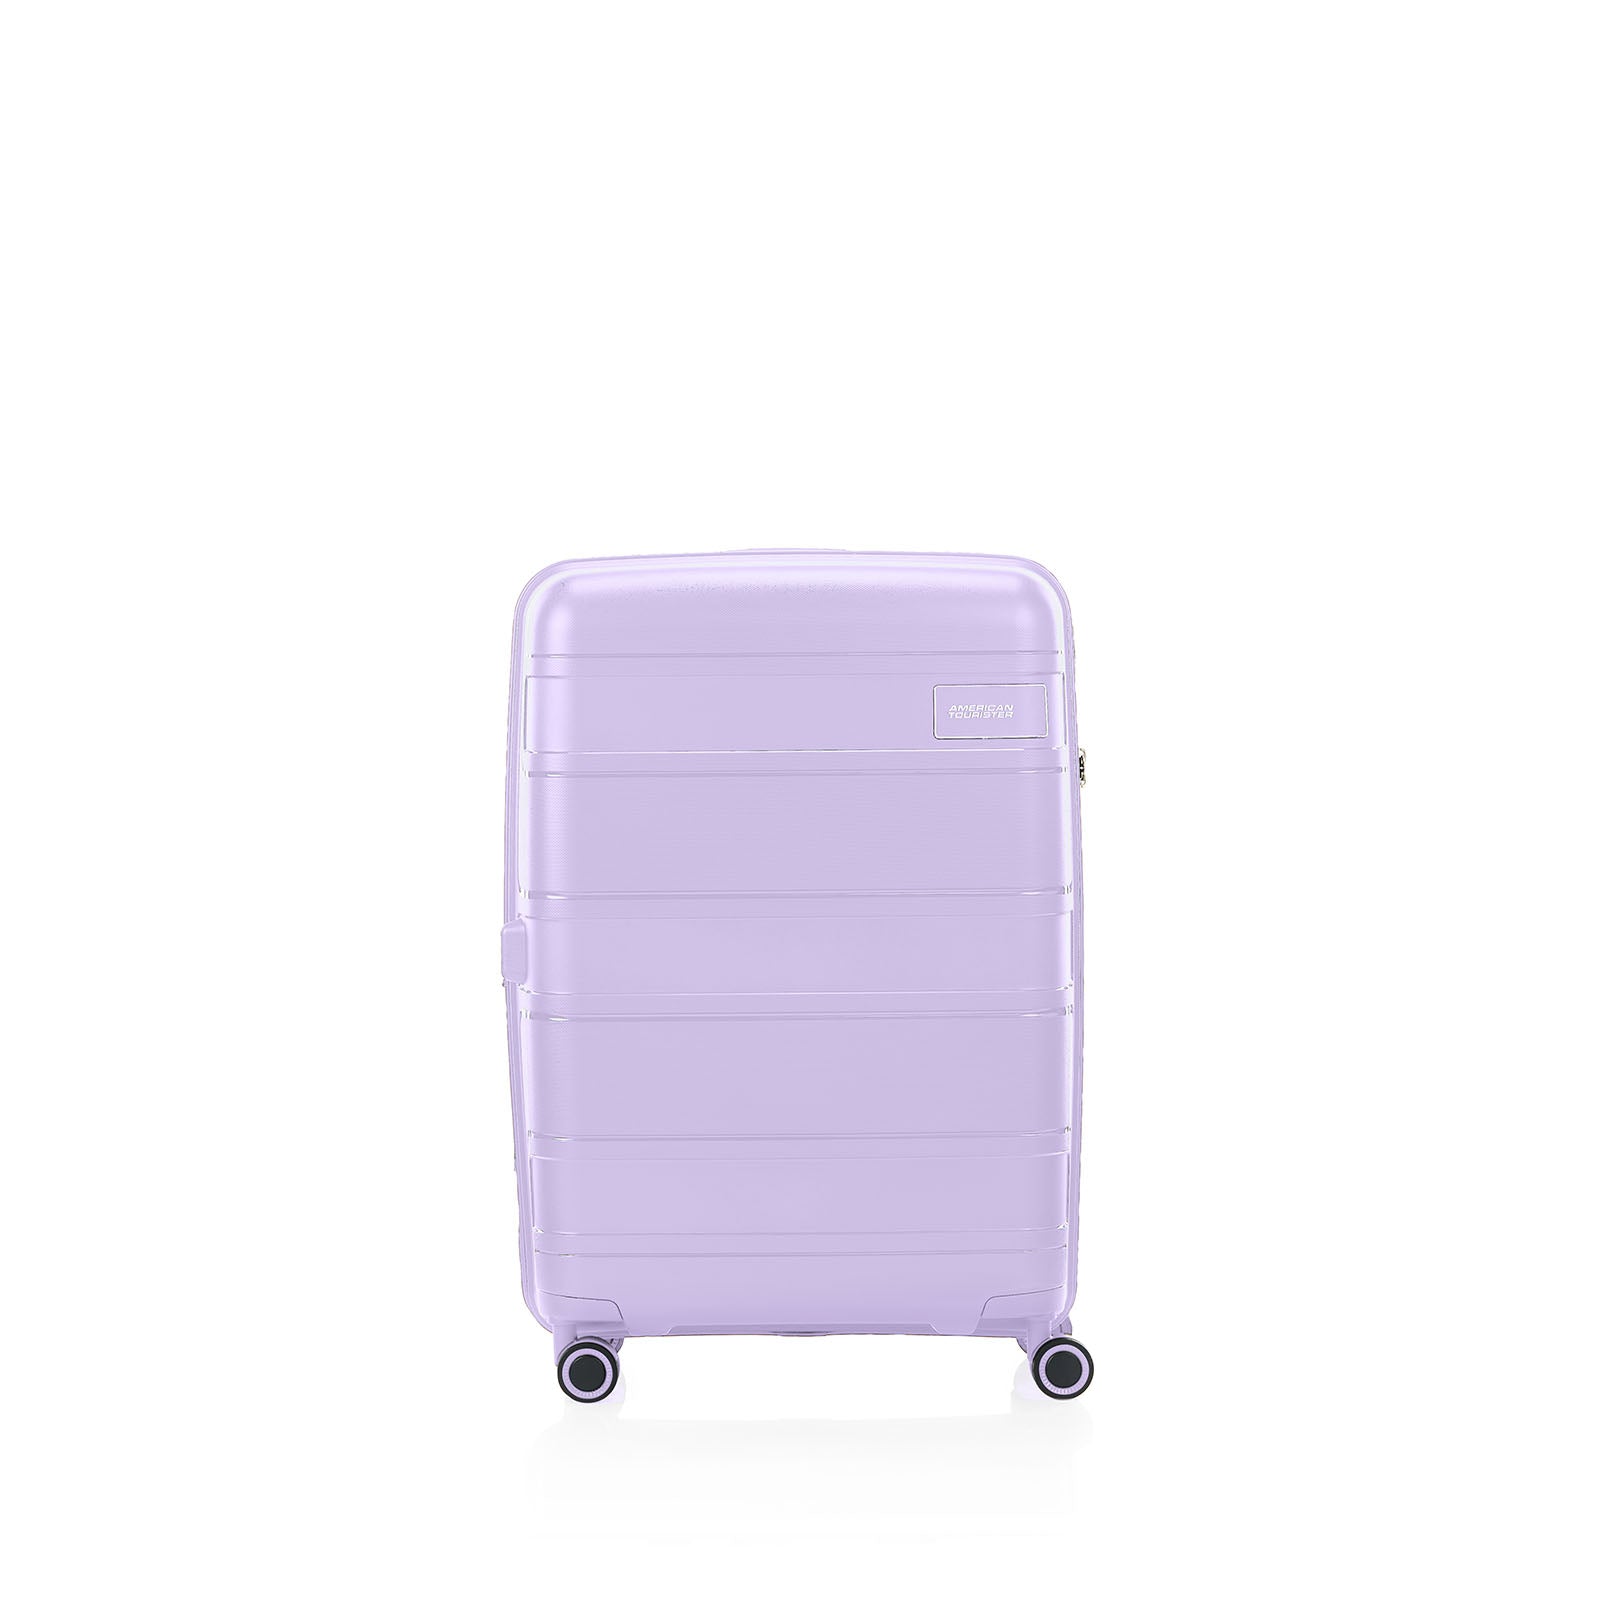 American-Tourister-Light-Max-69cm-Suitcase-Lavender-Front